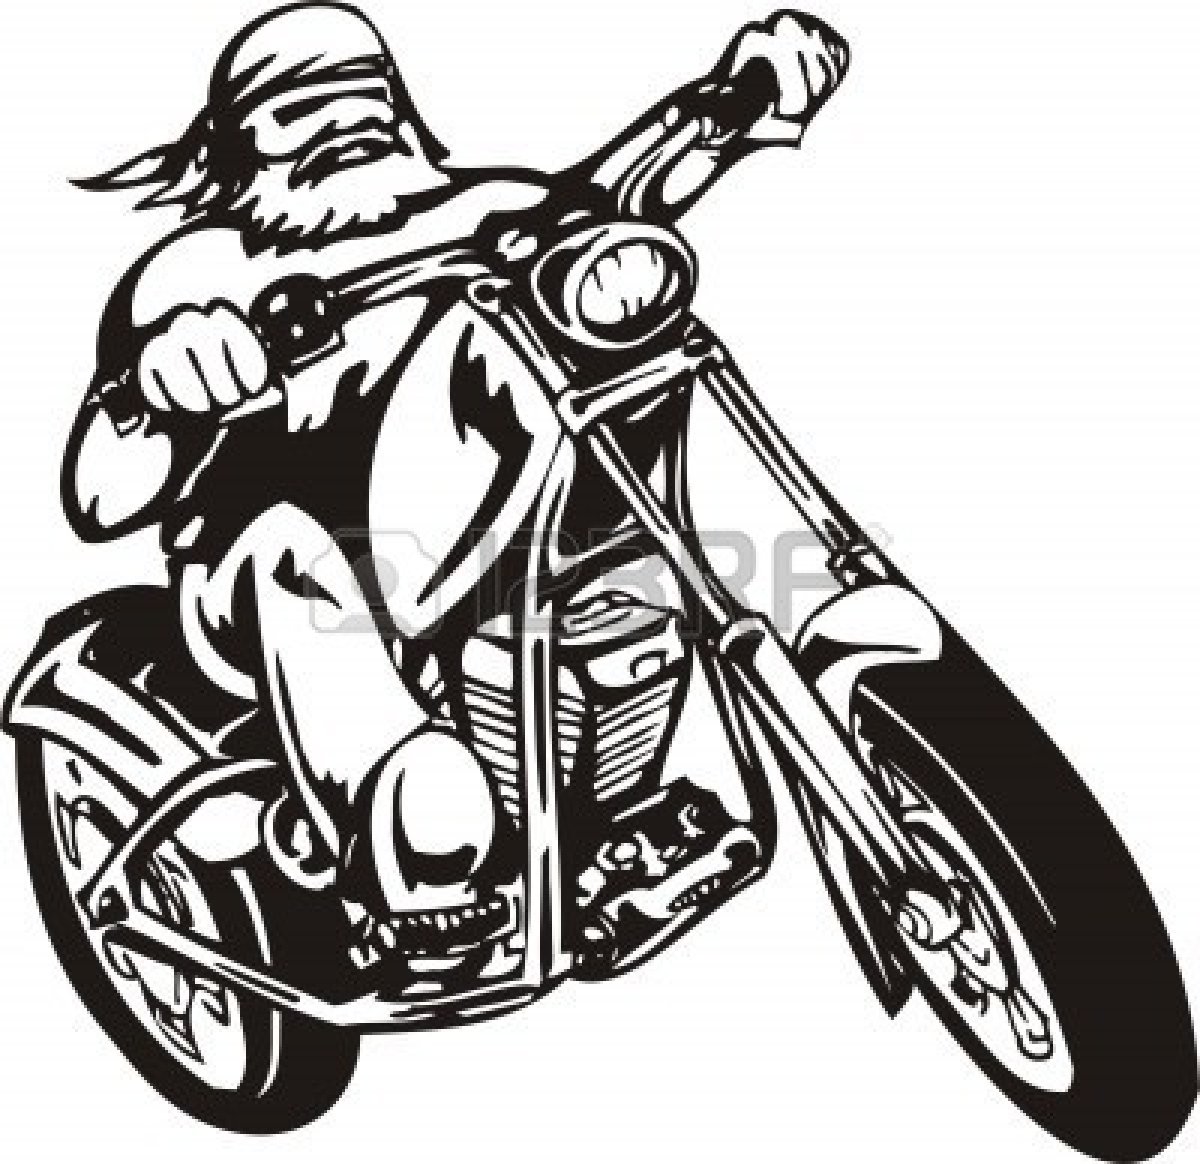 Harley Motorcycle Outline Clip Art